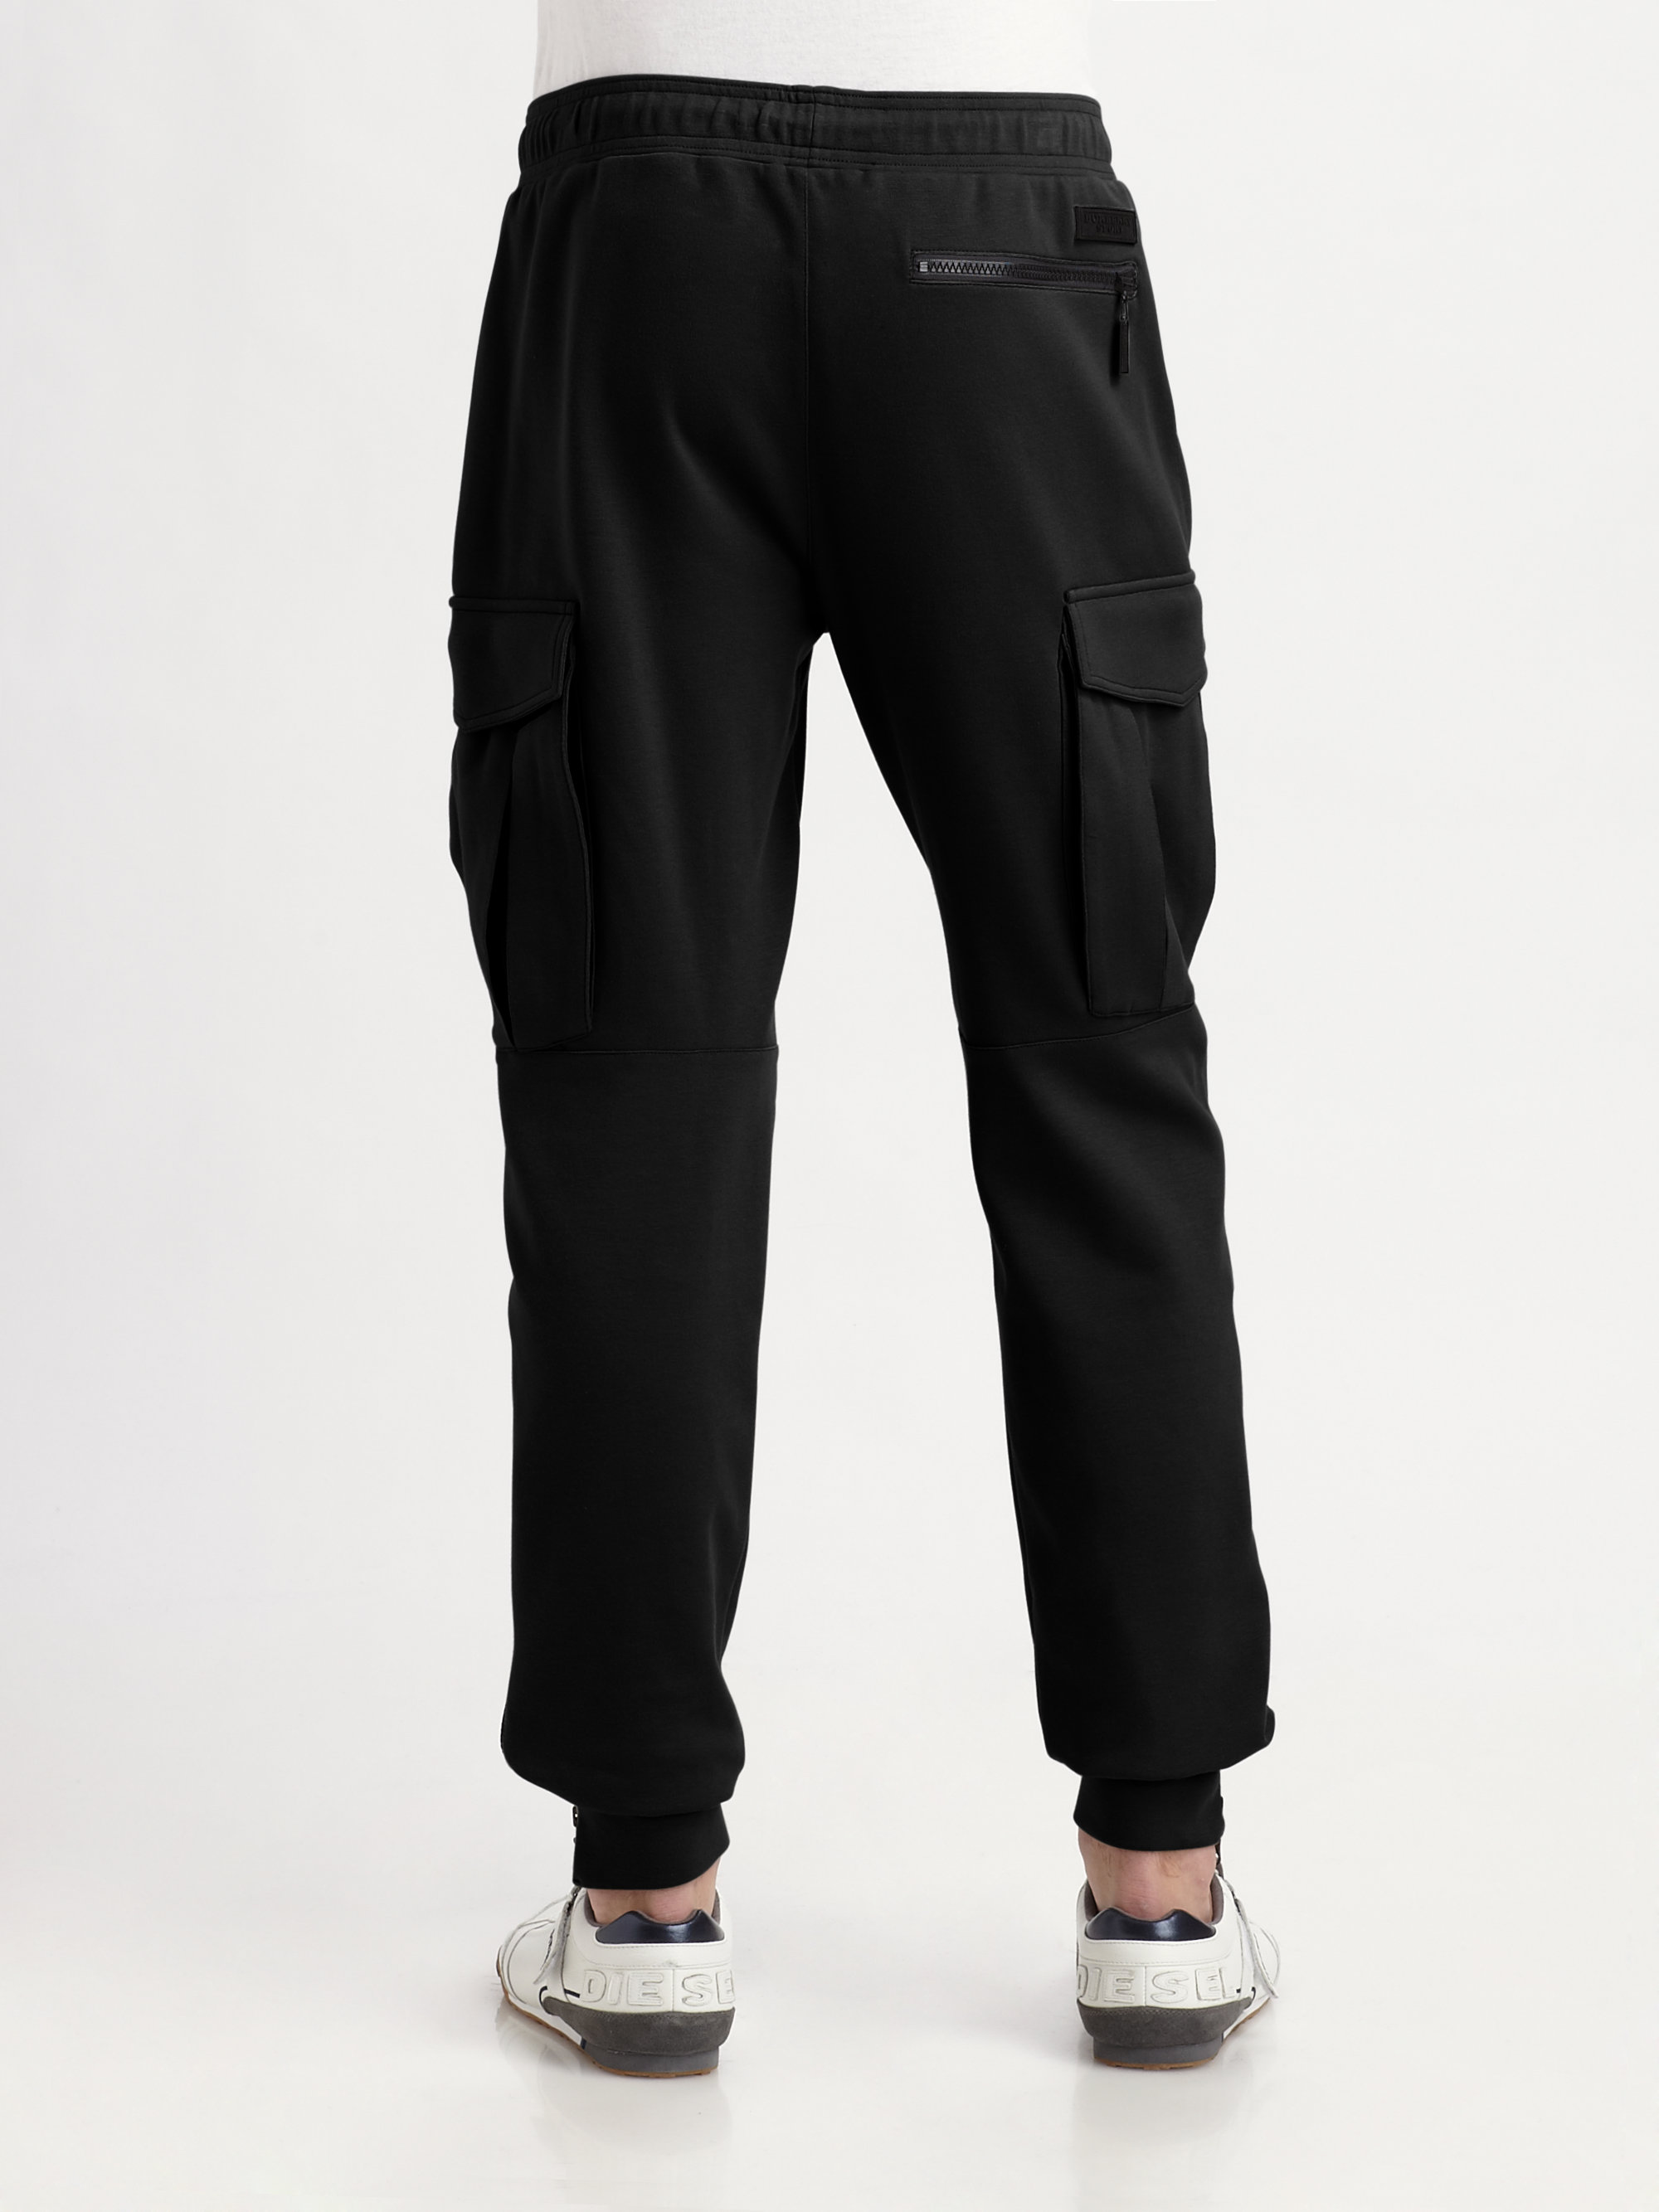 Lyst - Burberry Sport Drawstring Parachute Pants in Black for Men